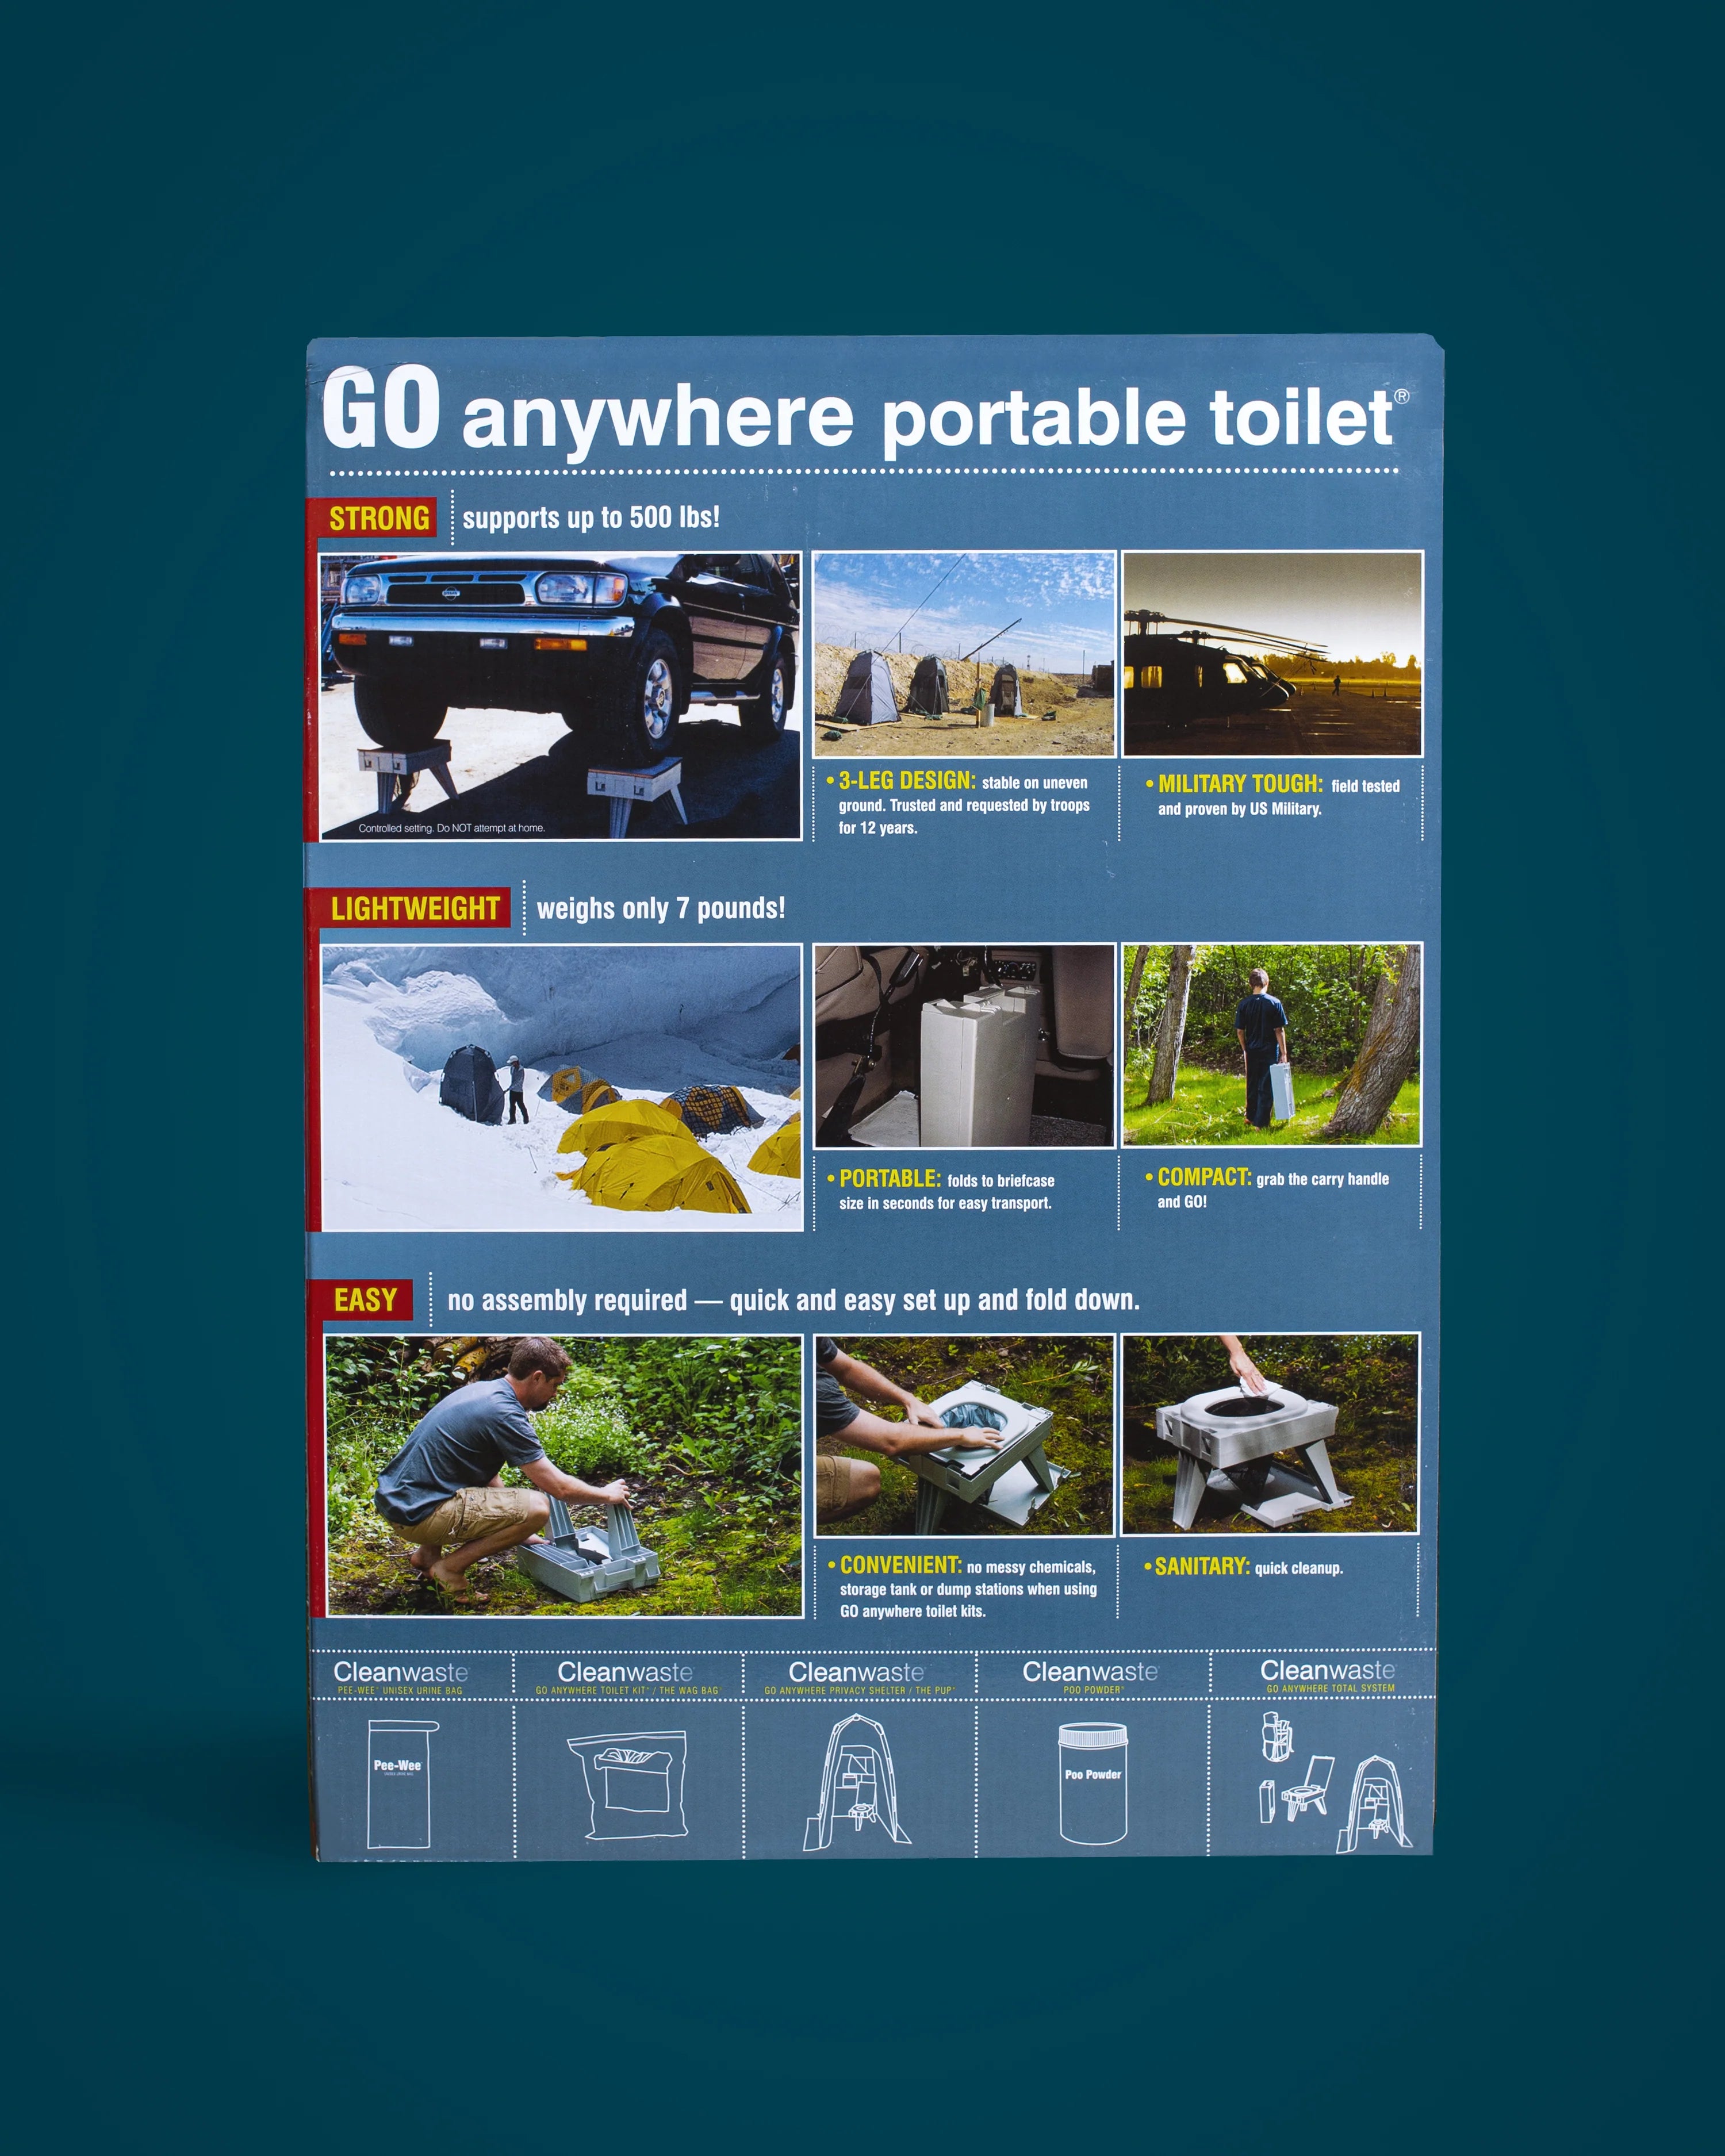 Clean Waste GO Anywhere Portable Toilet